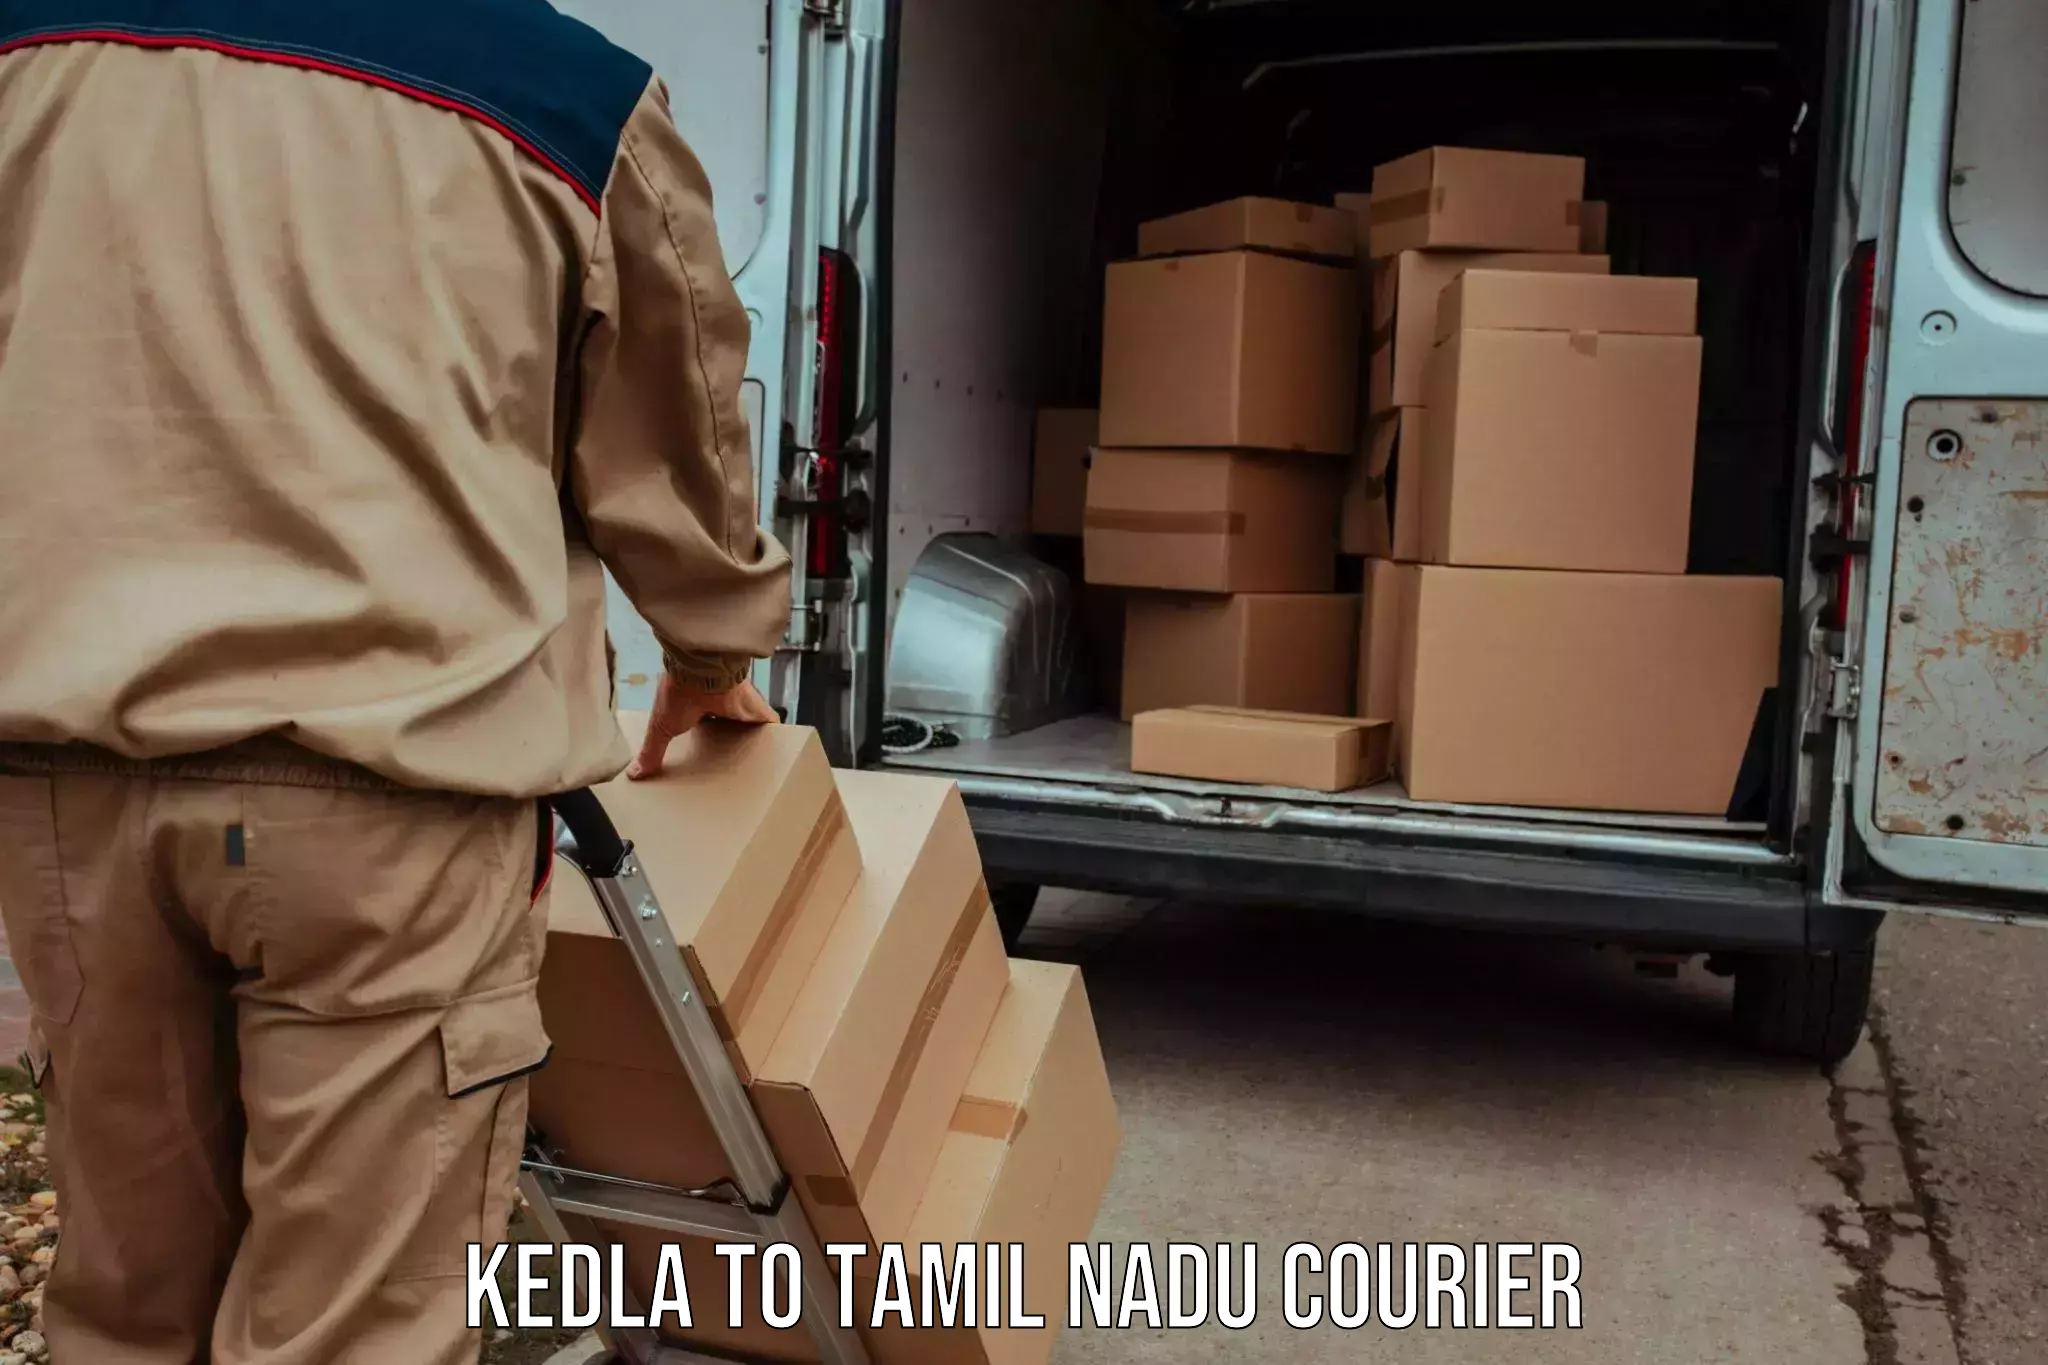 Express mail service Kedla to Thiruvarur